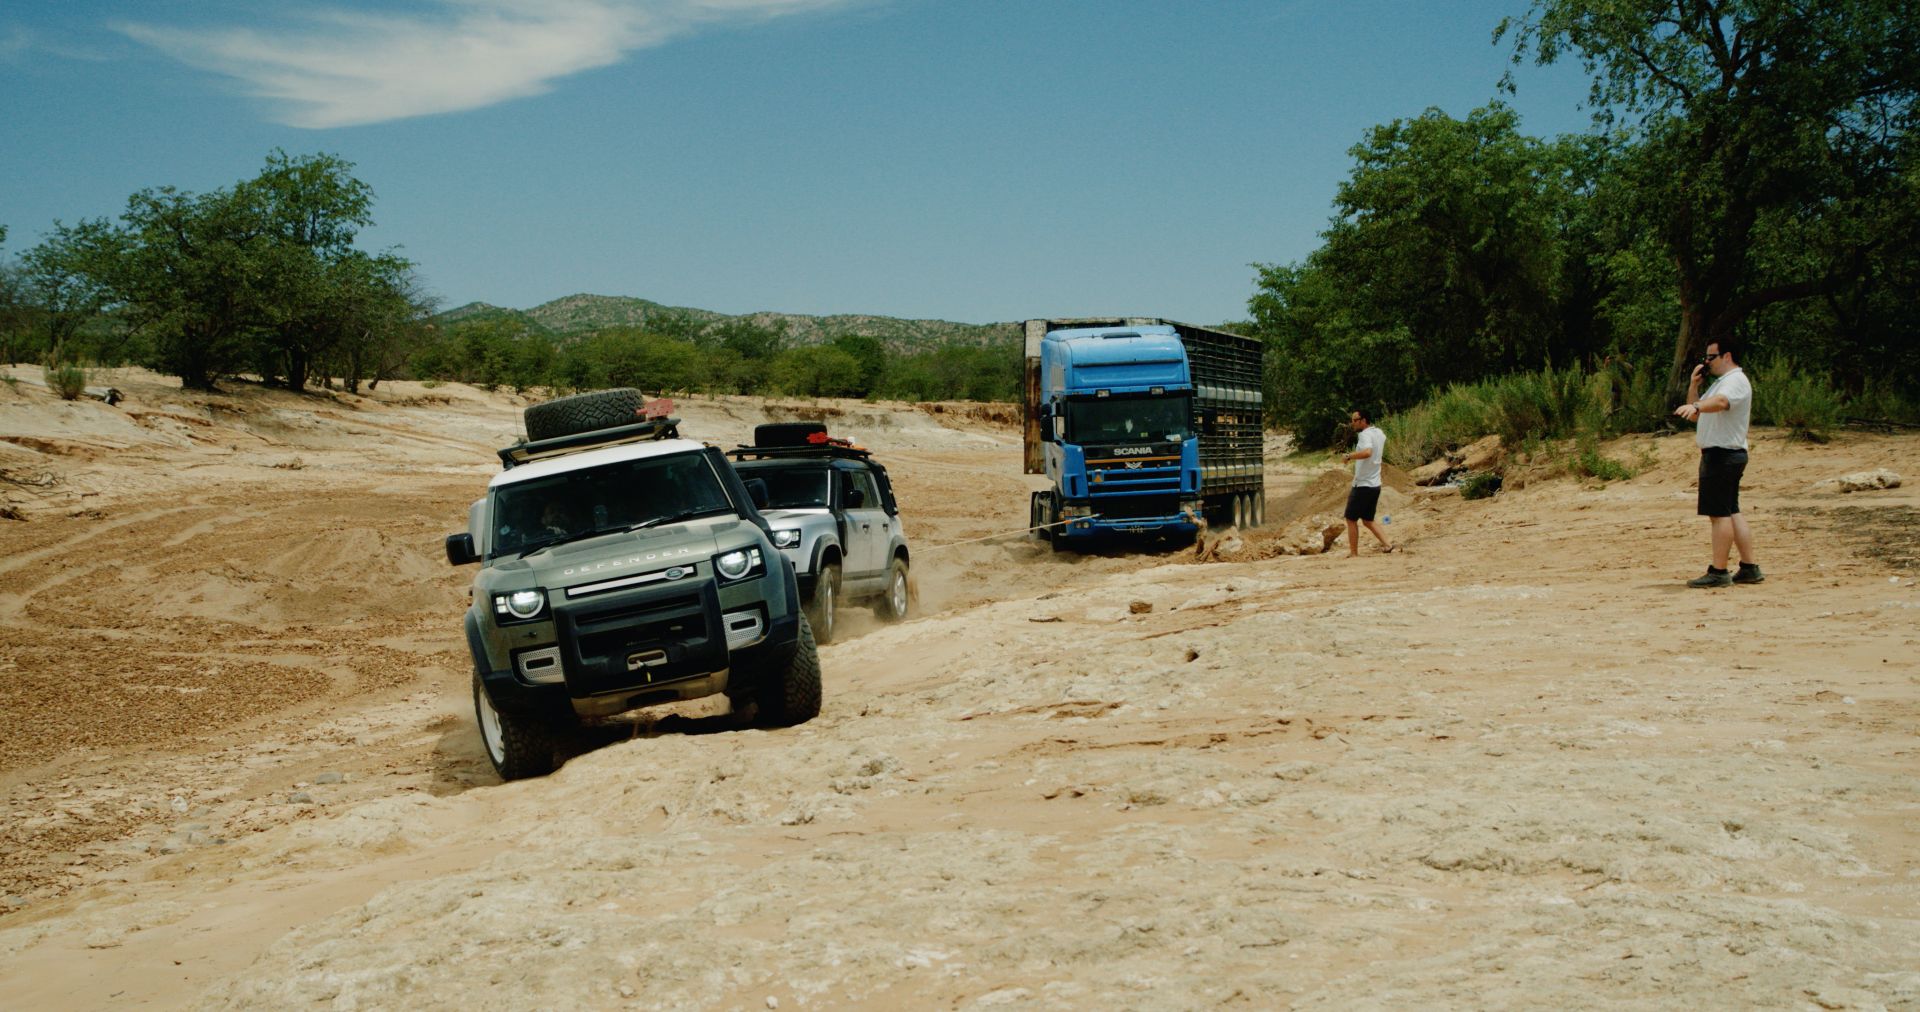 Pair-of-2020-Land-Rover-Defender-SUVs-rescue-semi-truck-stuck-in-Namib-Desert-1 (1)